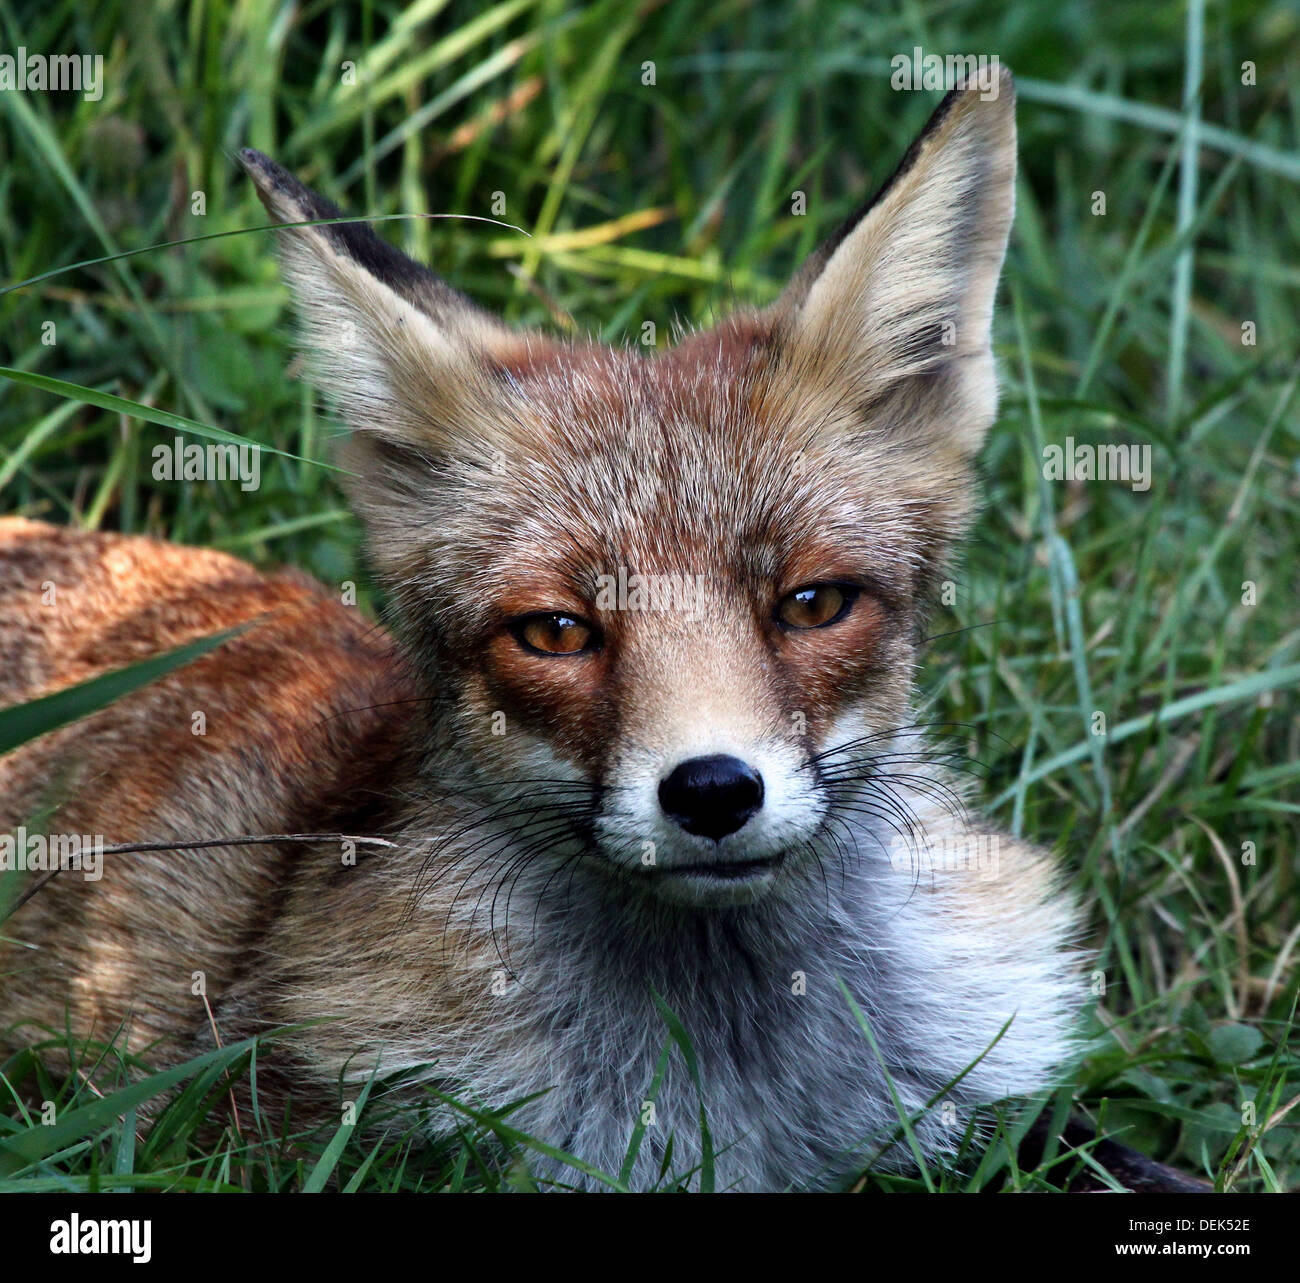 Red fox i portrait Stock Photo